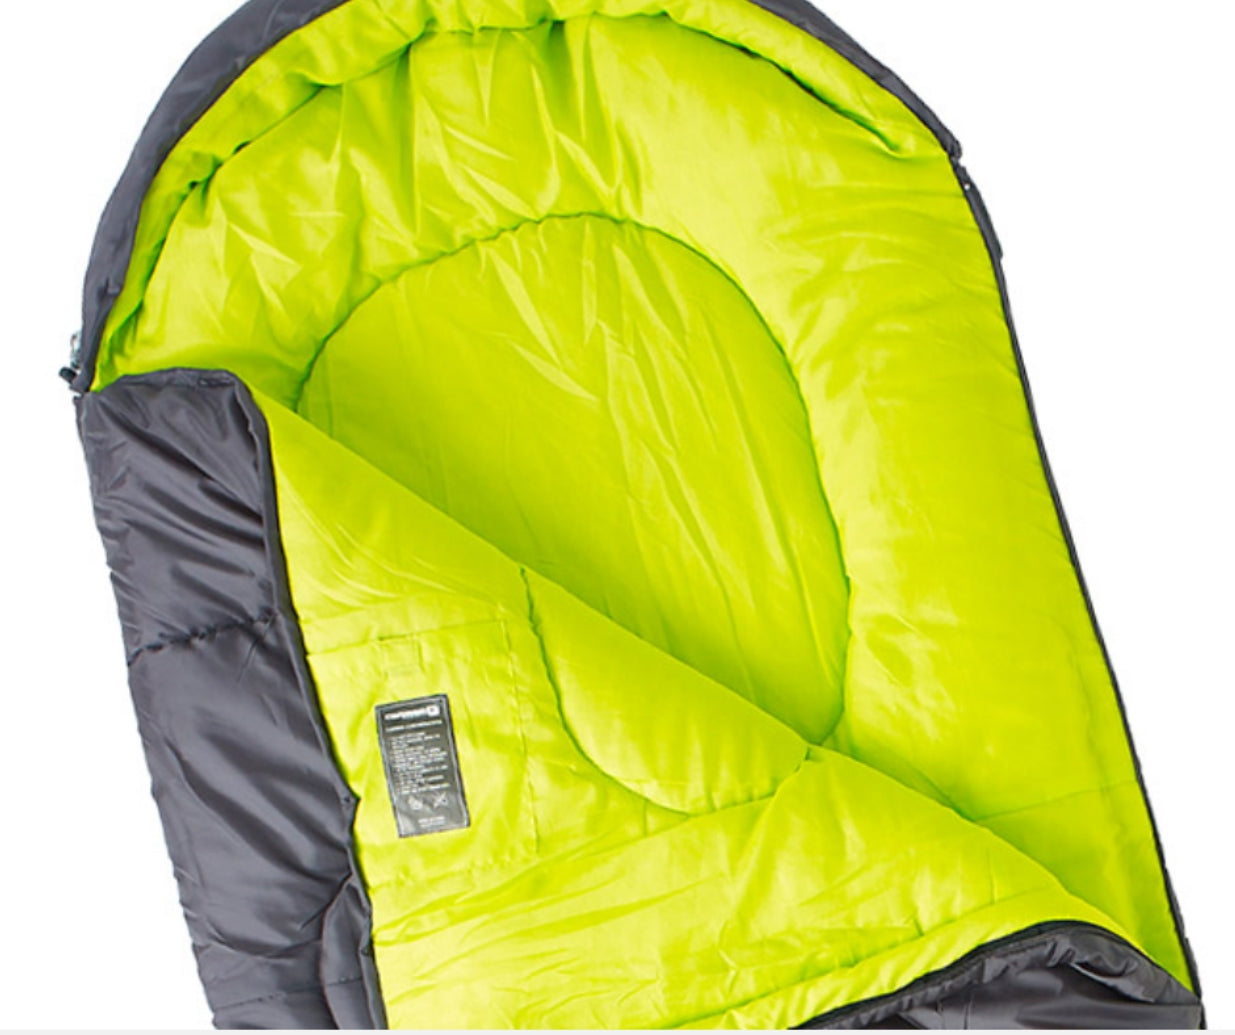 Glacial Bay (0C) sleeping bag